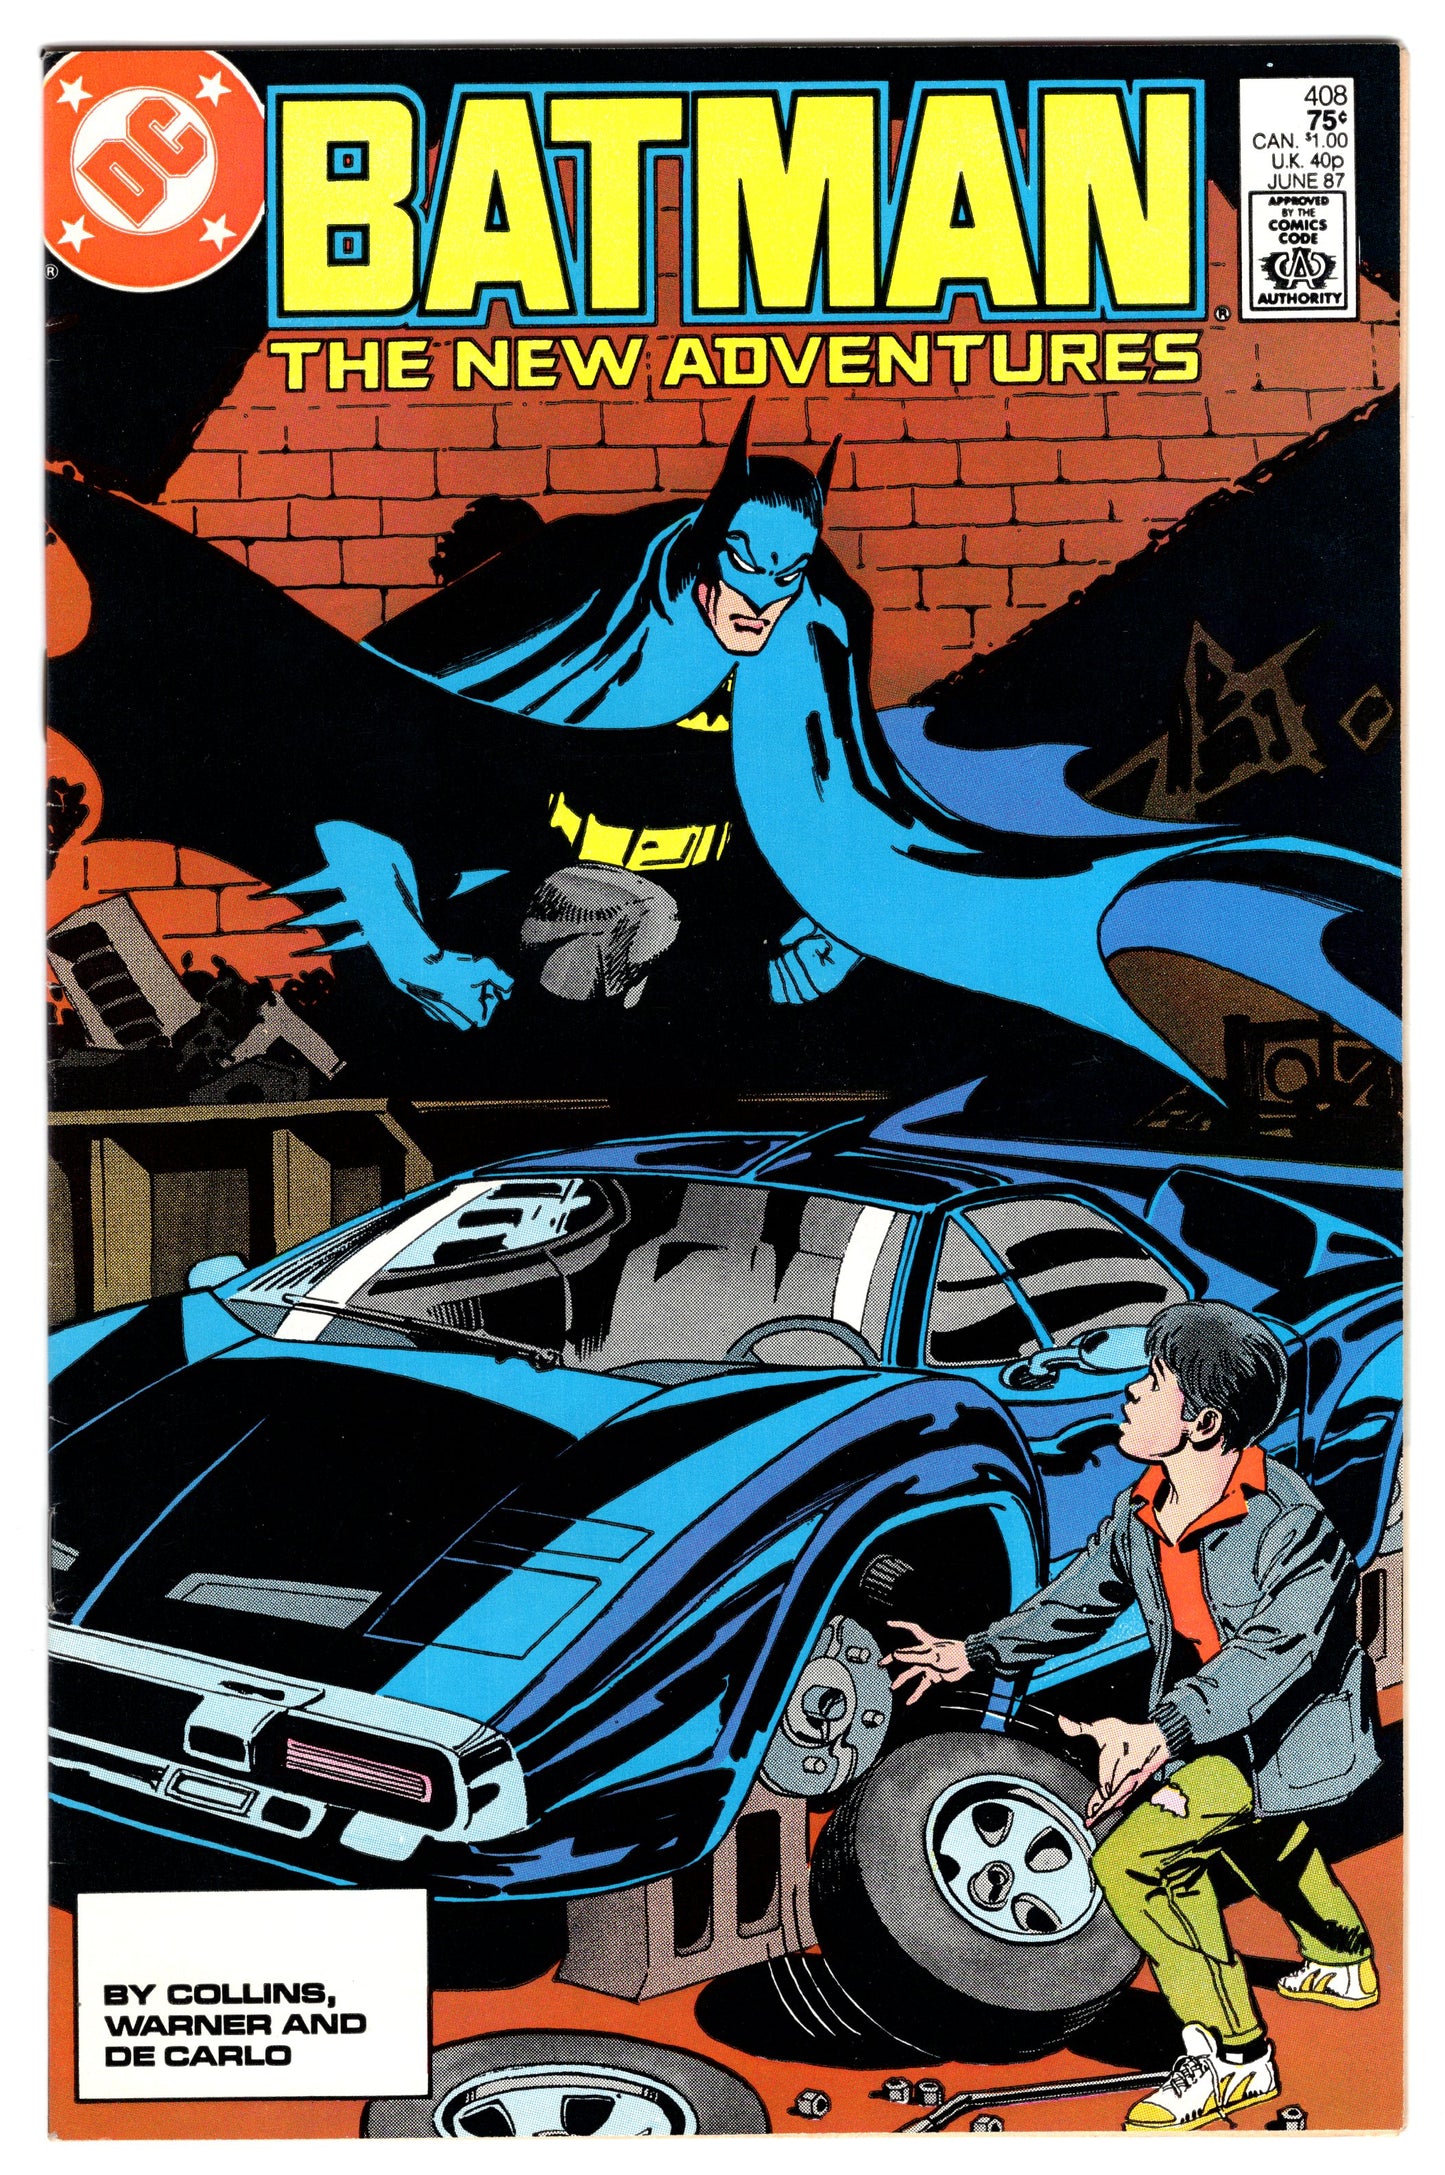 Batman - The New Adventures #408 "Origin Of Jason Todd" (June, 1987 - DC Comics) FN+